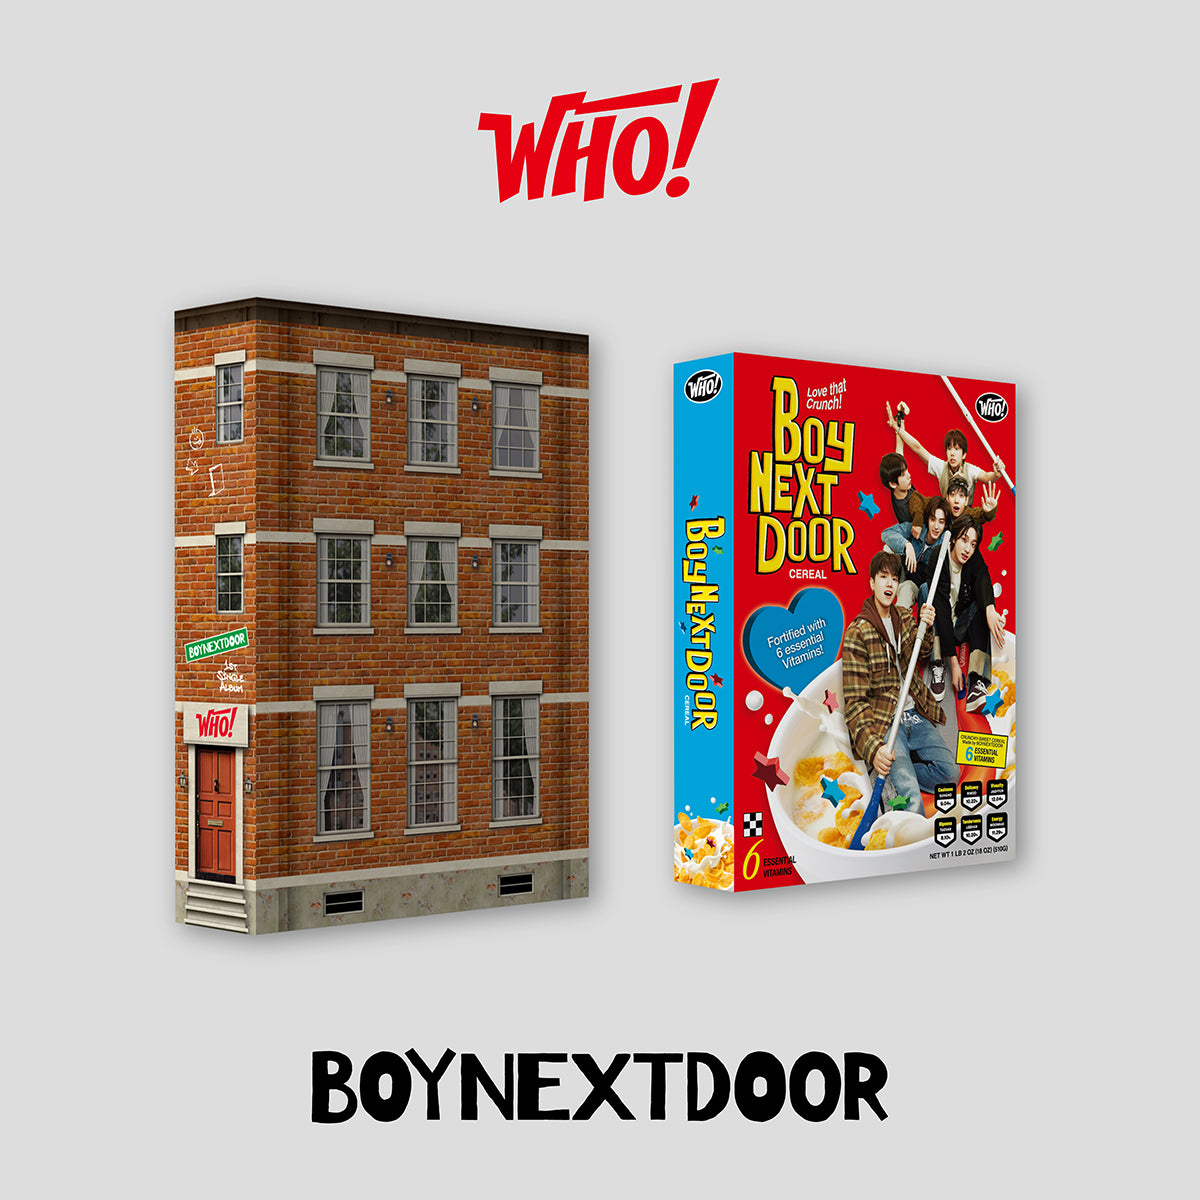 BOYNEXTDOOR - WHO! (Random Ver.)